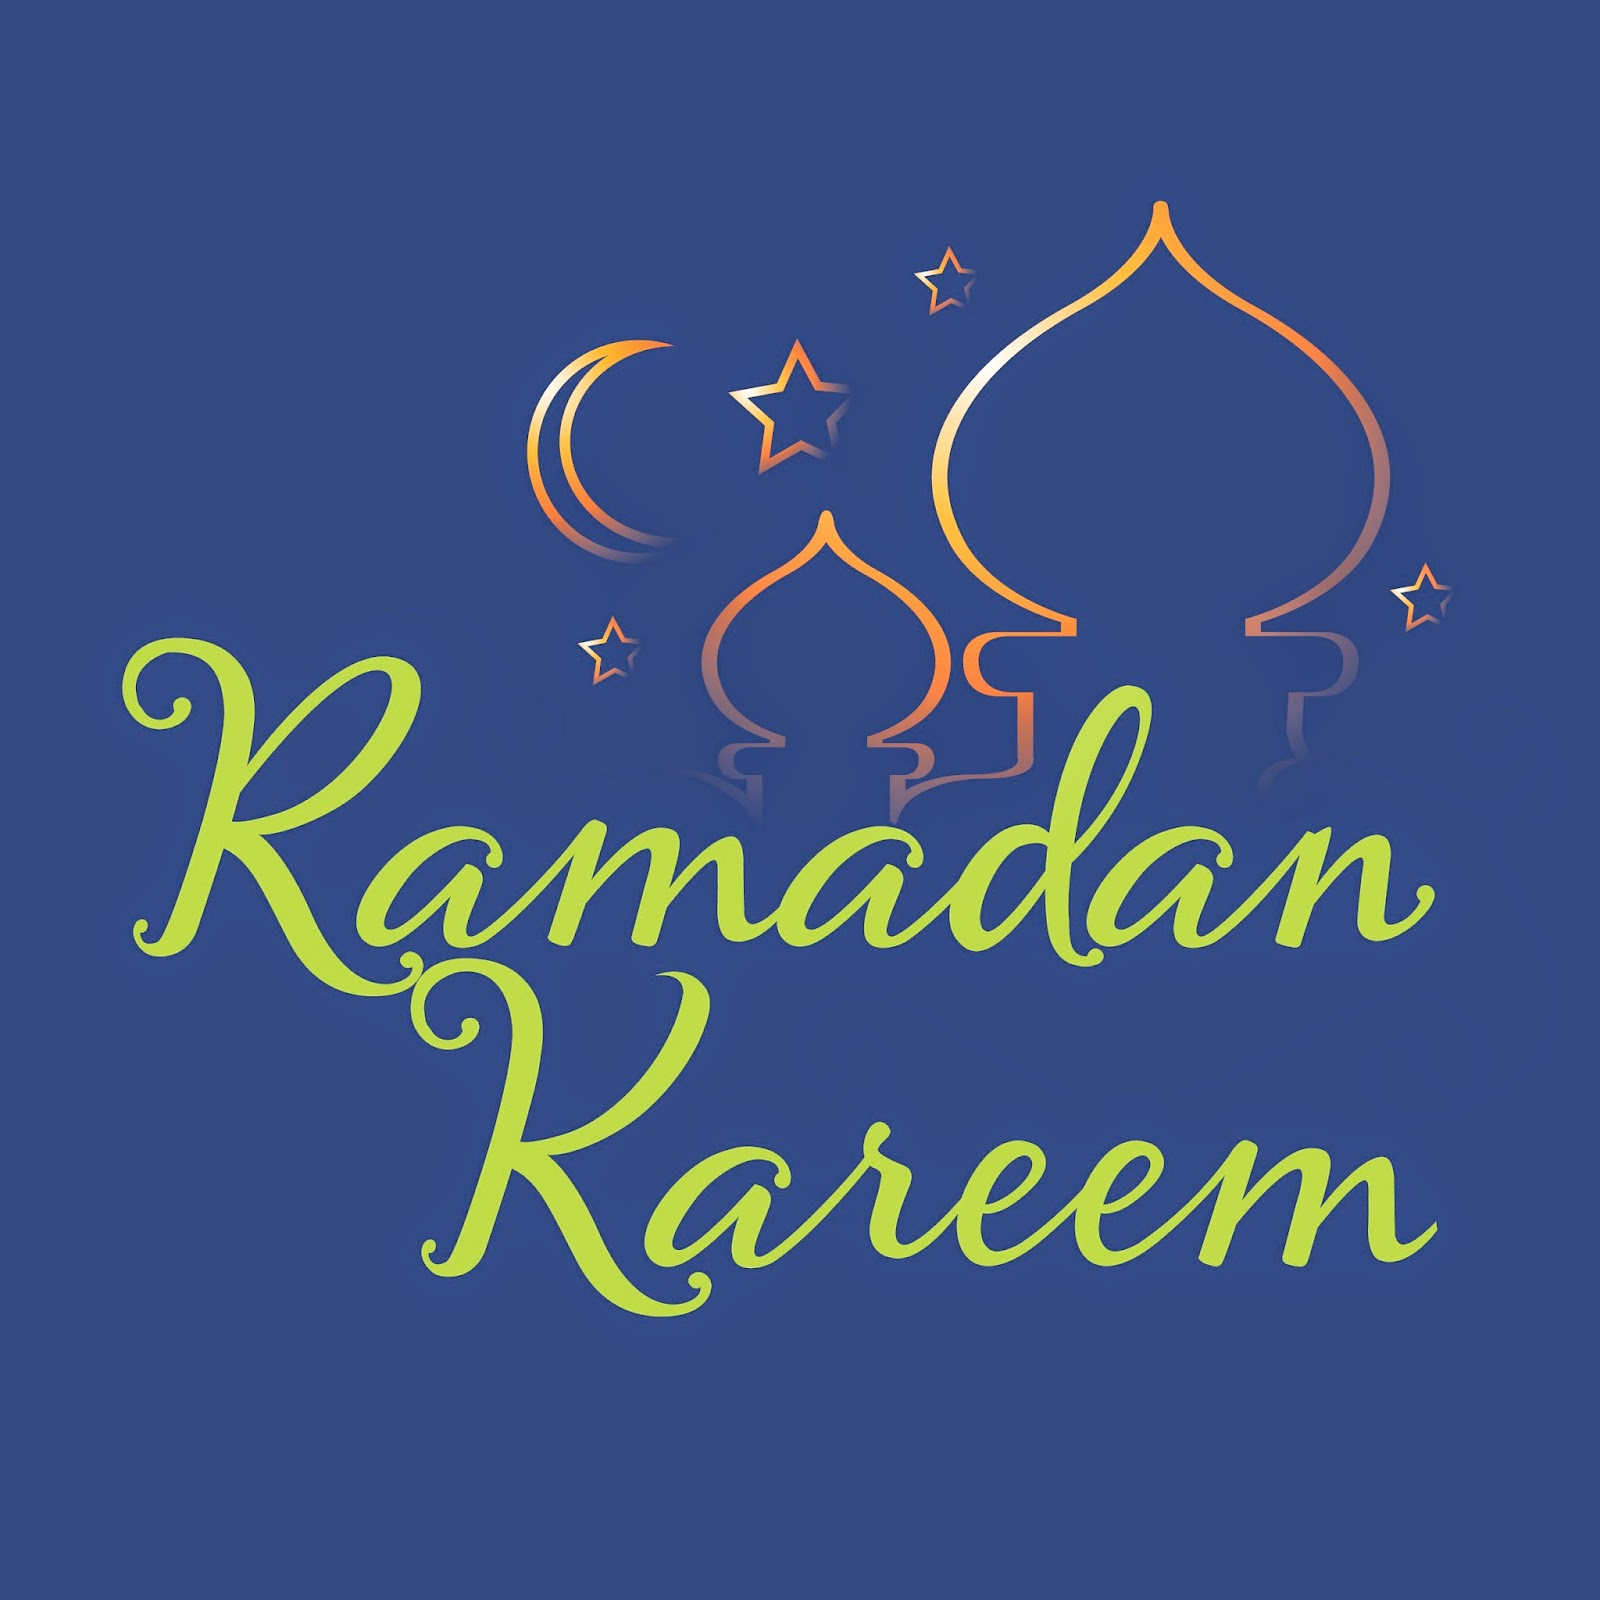 Free Clip Arts Happy Ramadan Kareem Night Celebration Designs